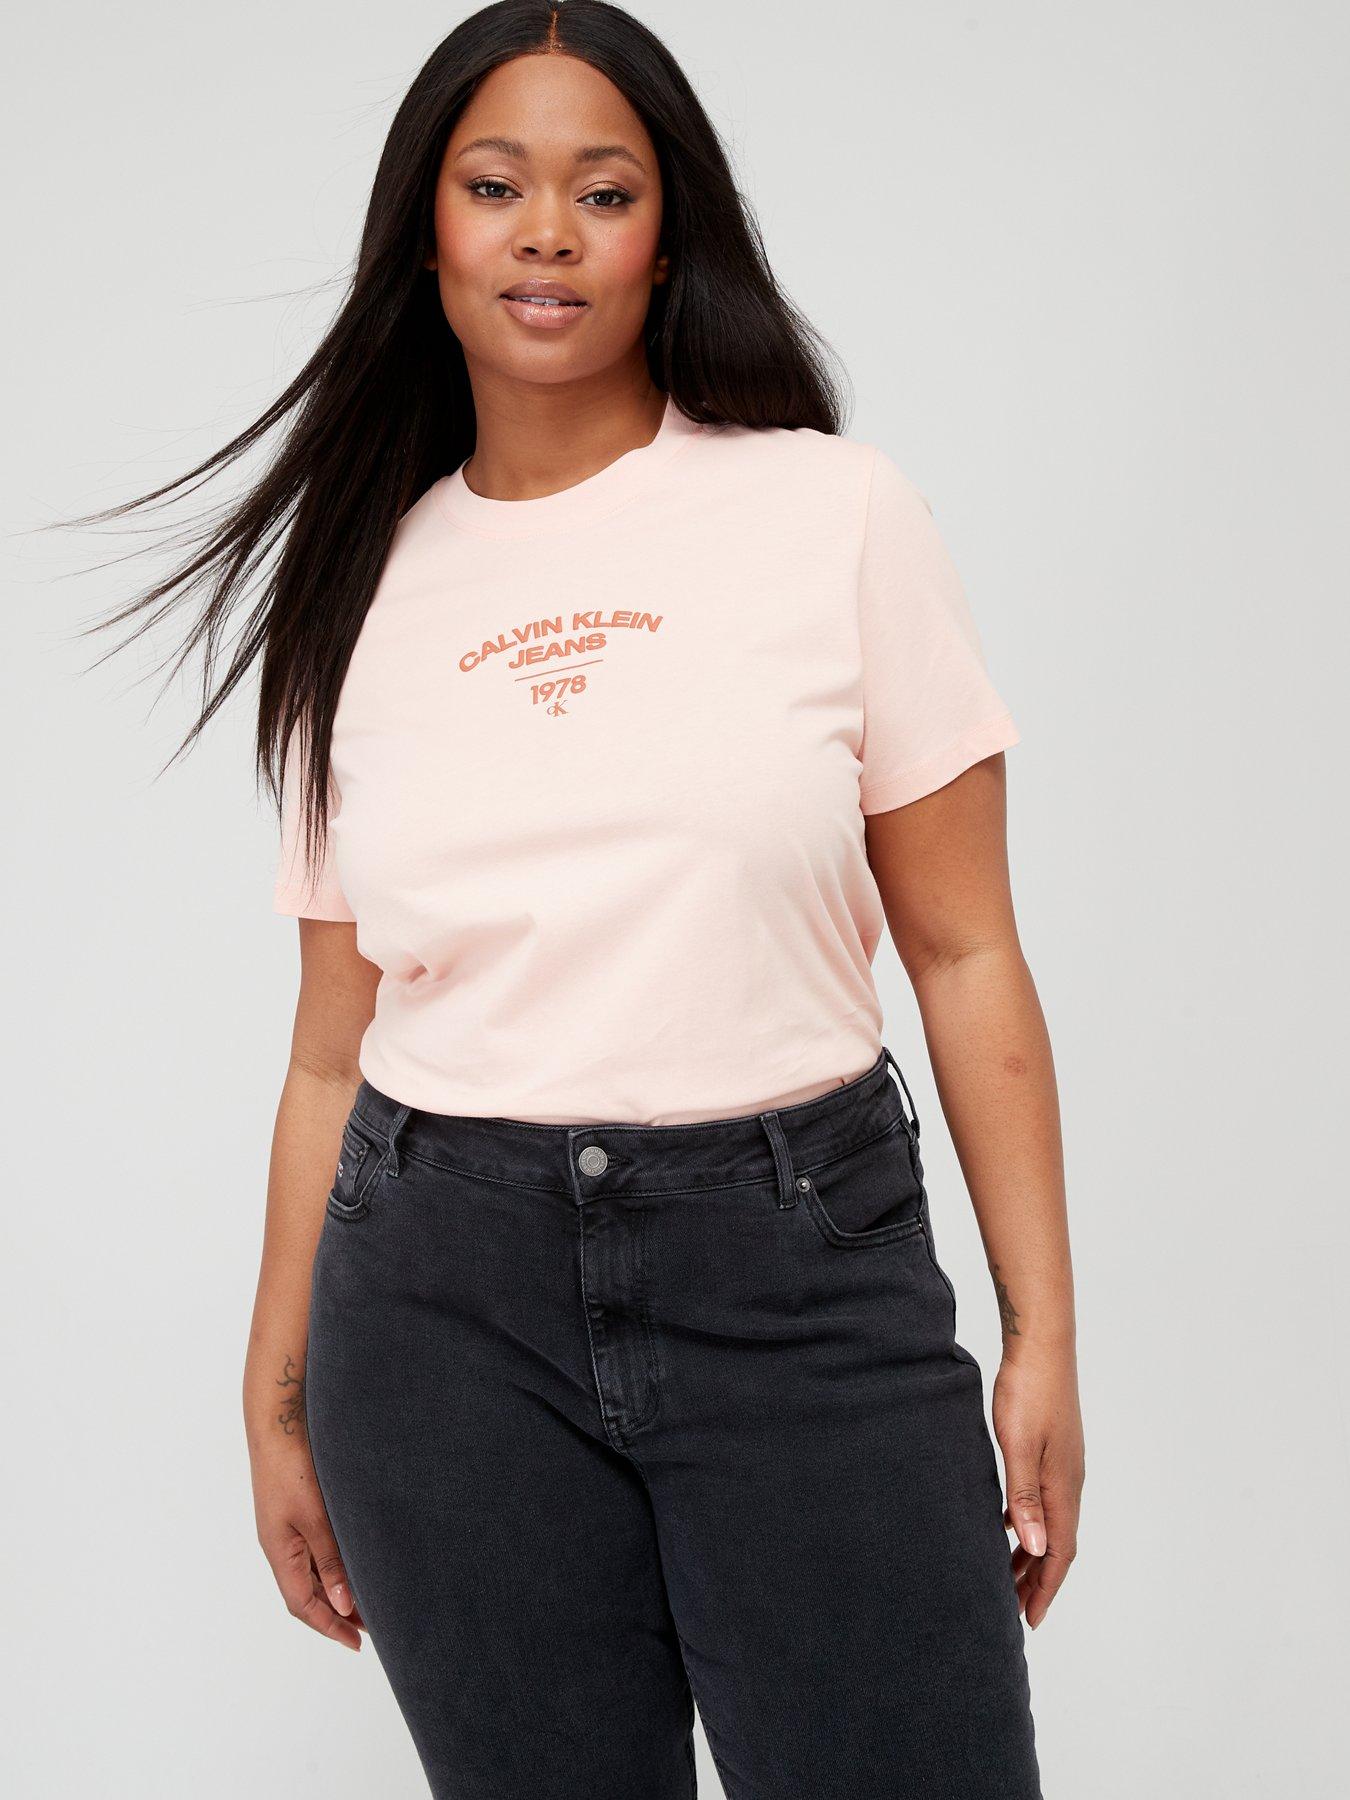 jeans Short Sleeve klein Ireland Tops | | | & Women Calvin t-shirts | Very